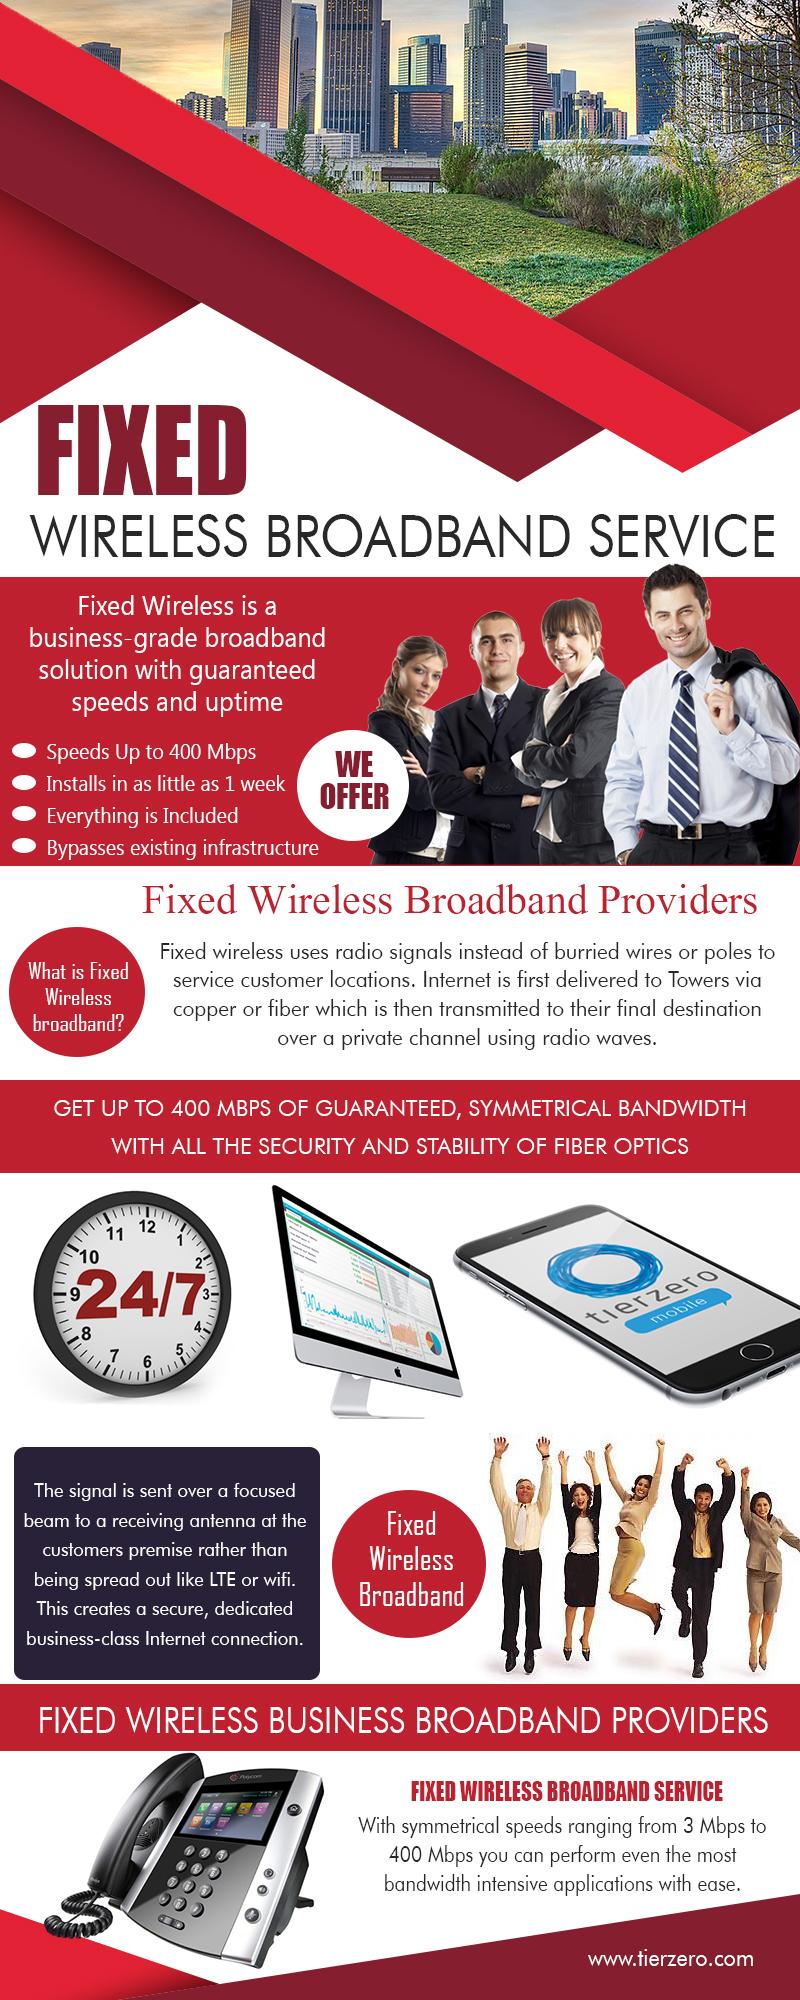 Fixed Wireless Broadband Service